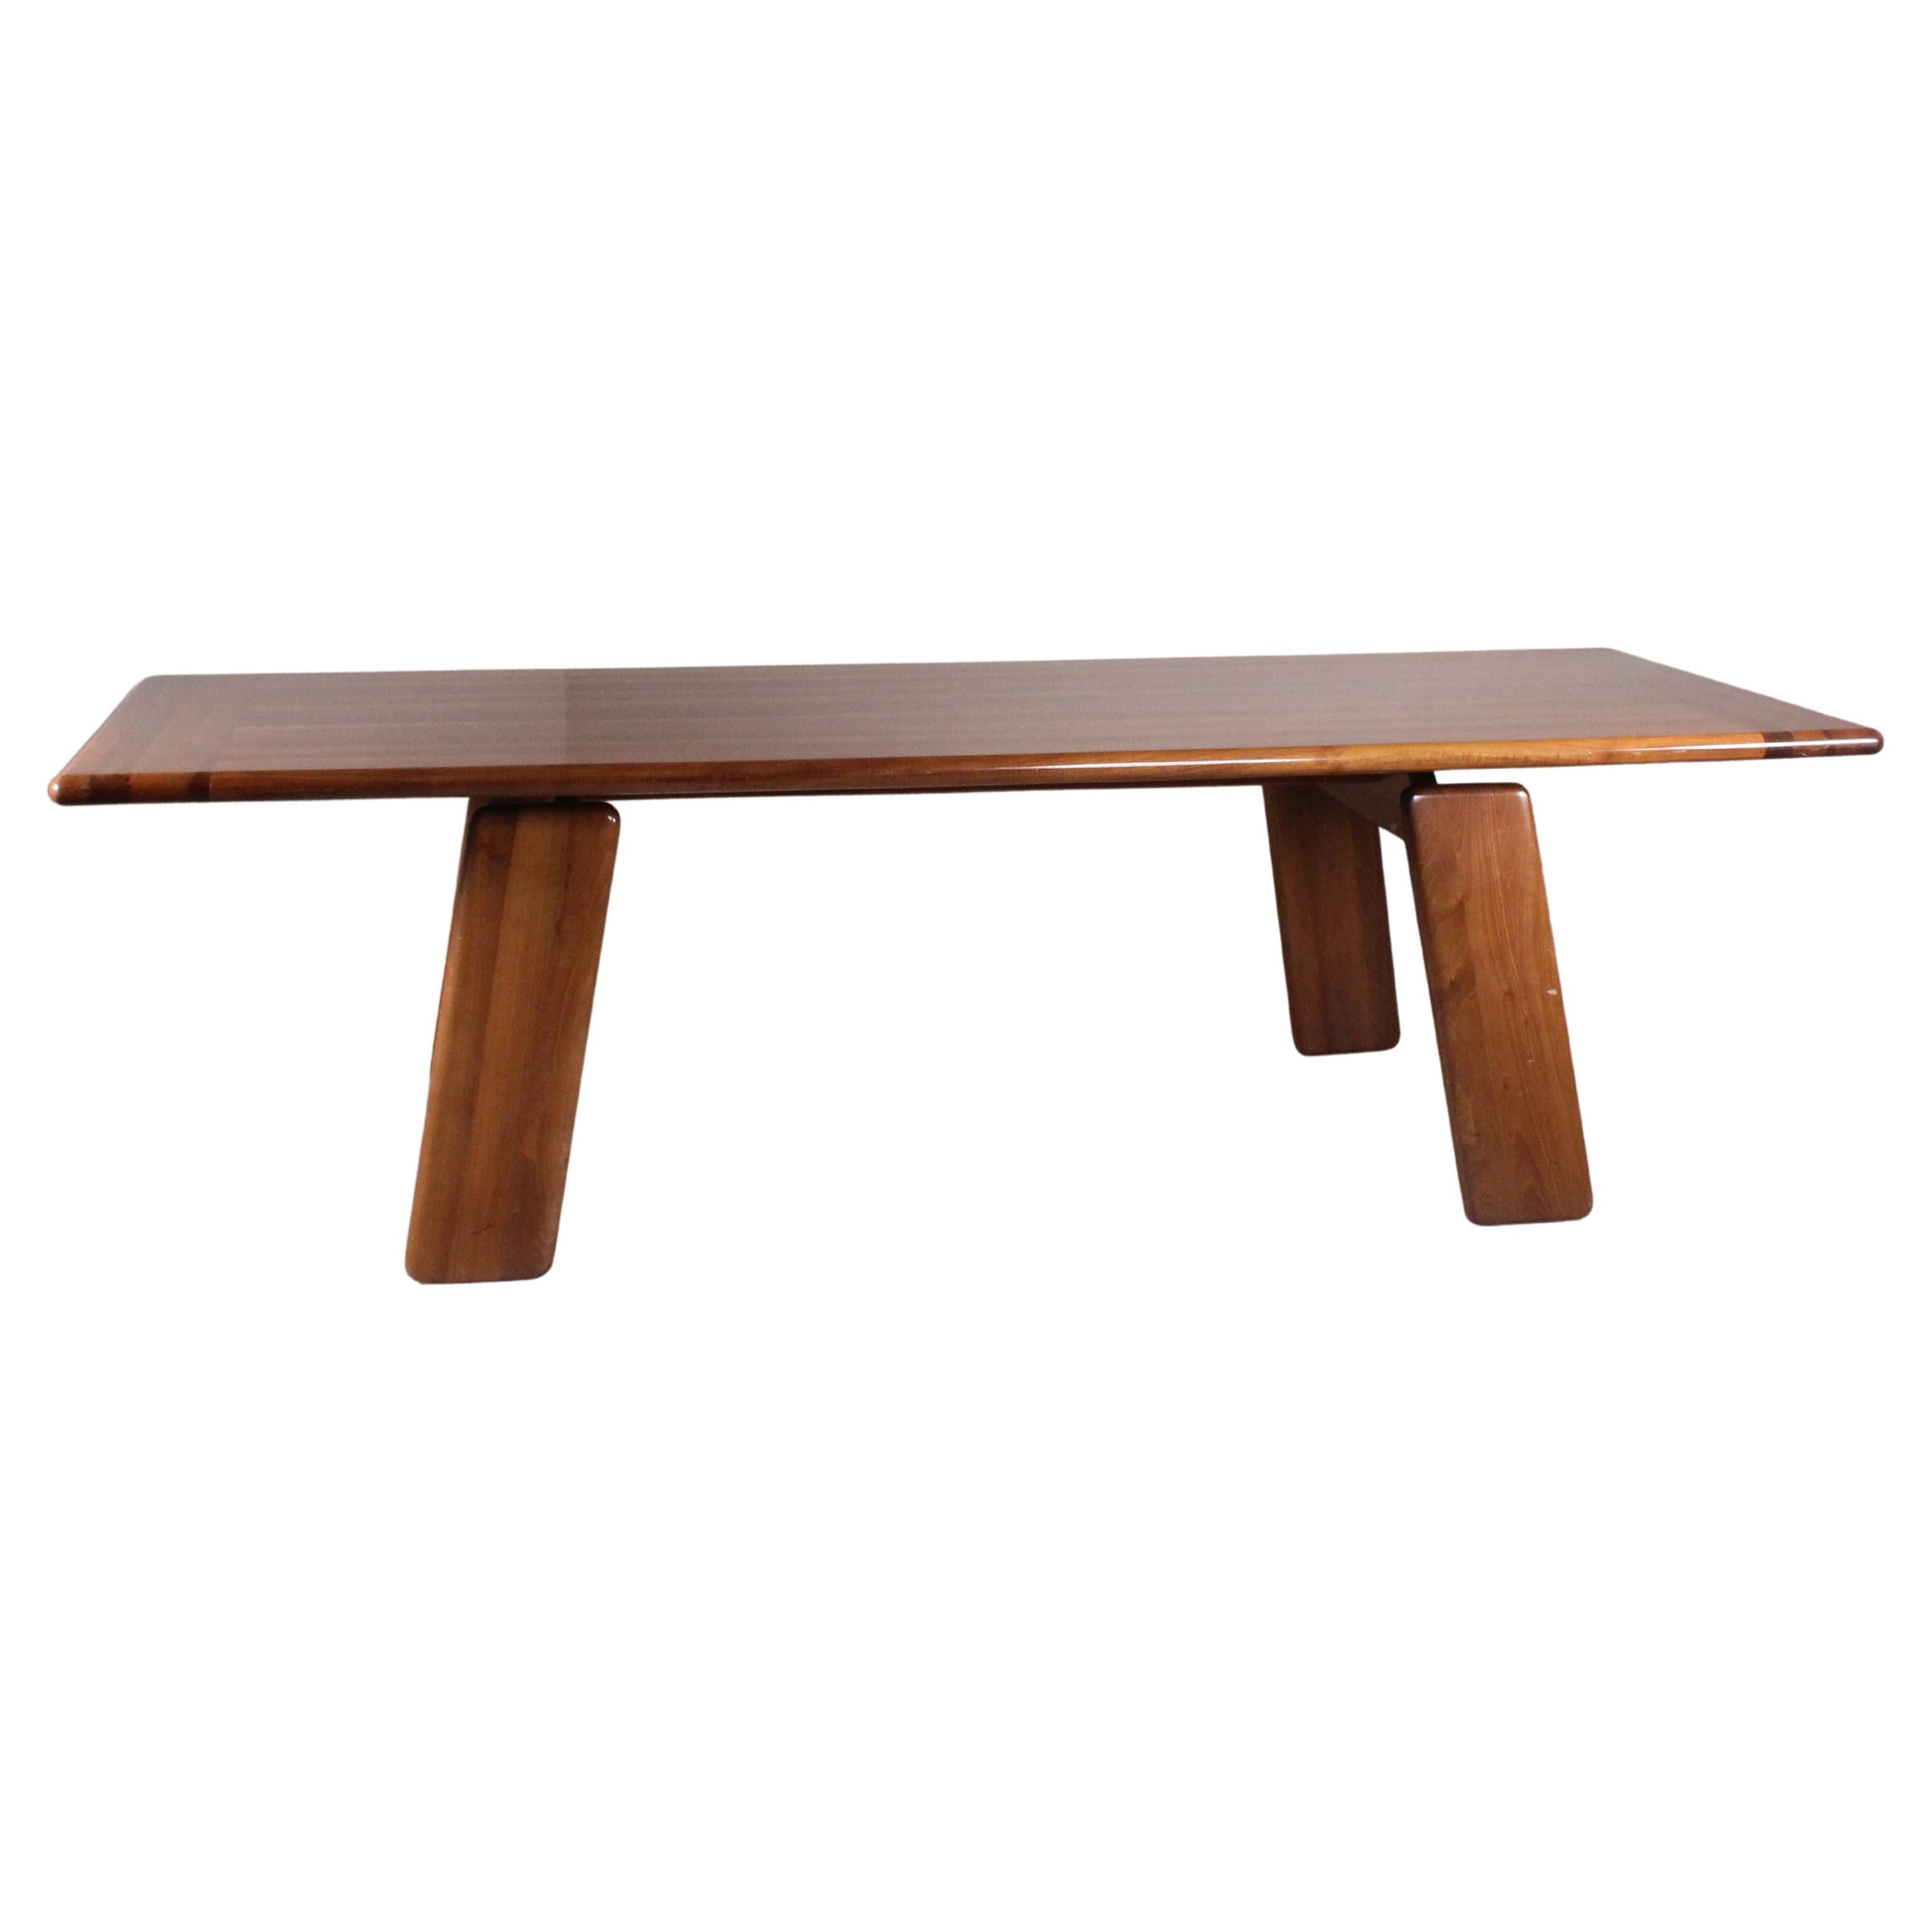  Wooden table, Mario Marenco, MobilGirgi, 1960